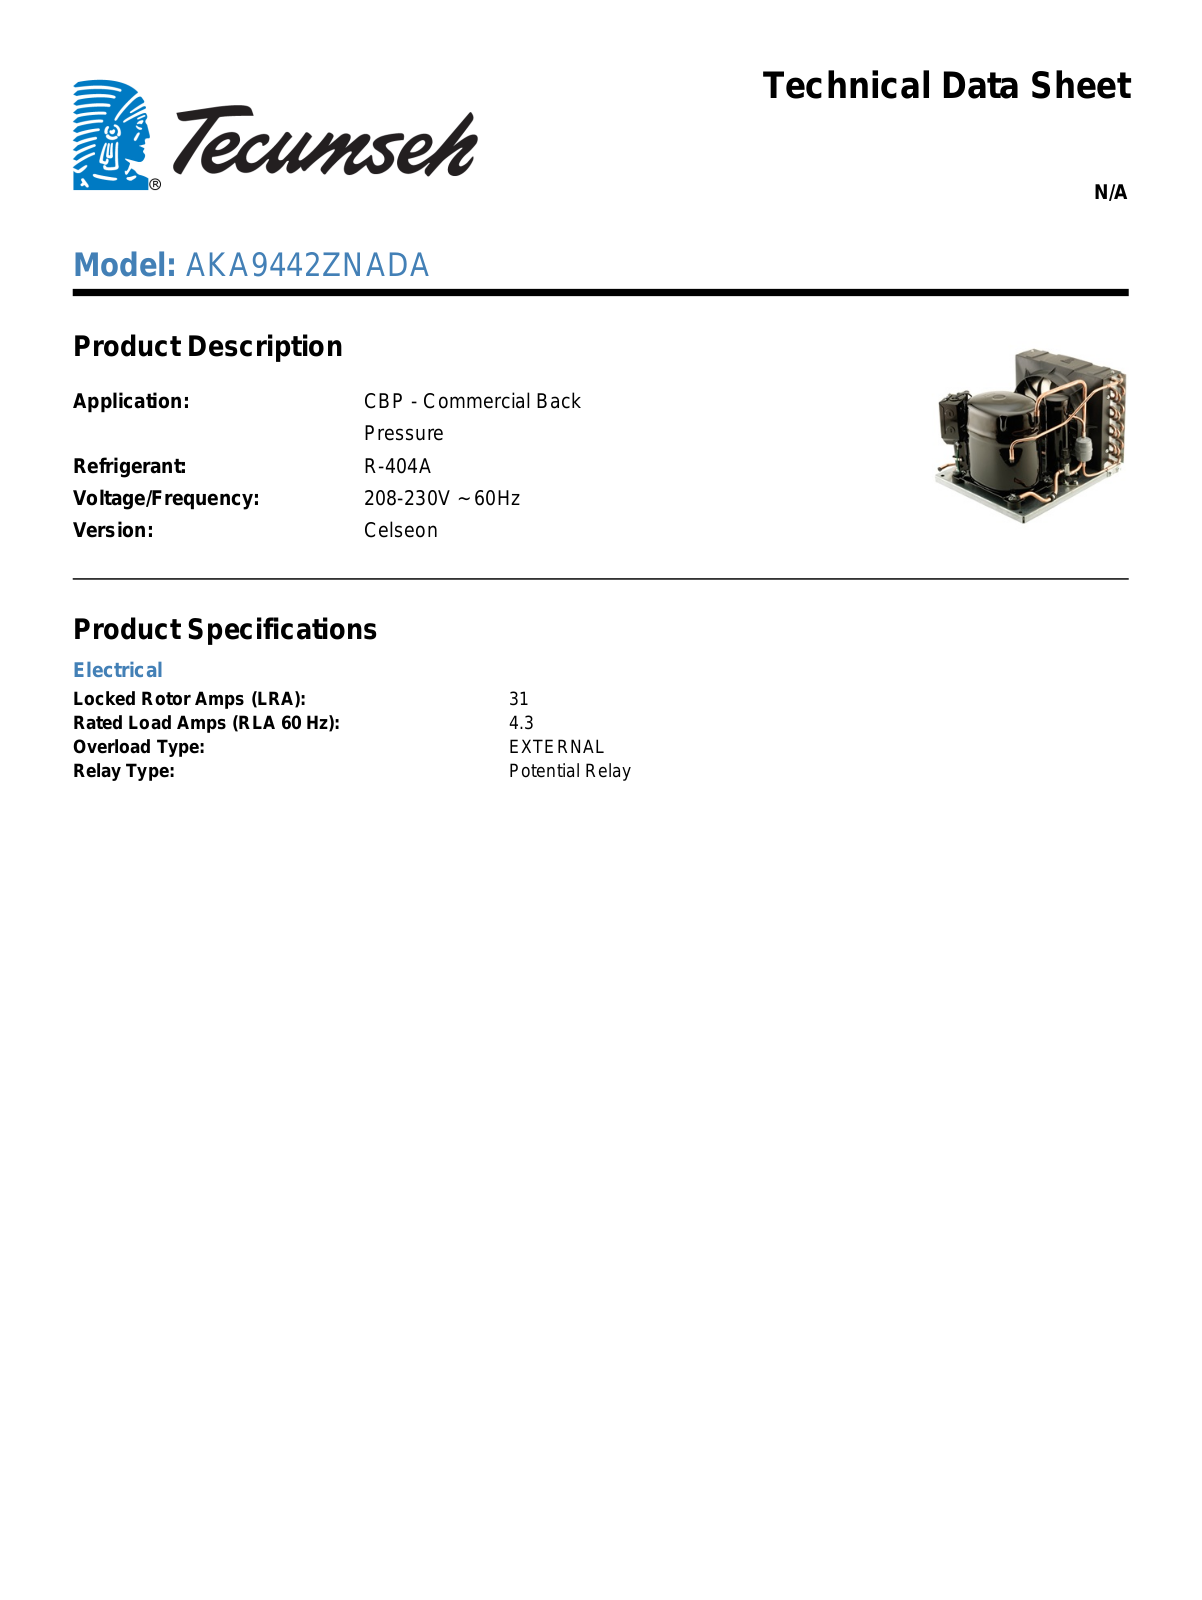 Tecumseh AKA9442ZNADA Technical Data Sheet